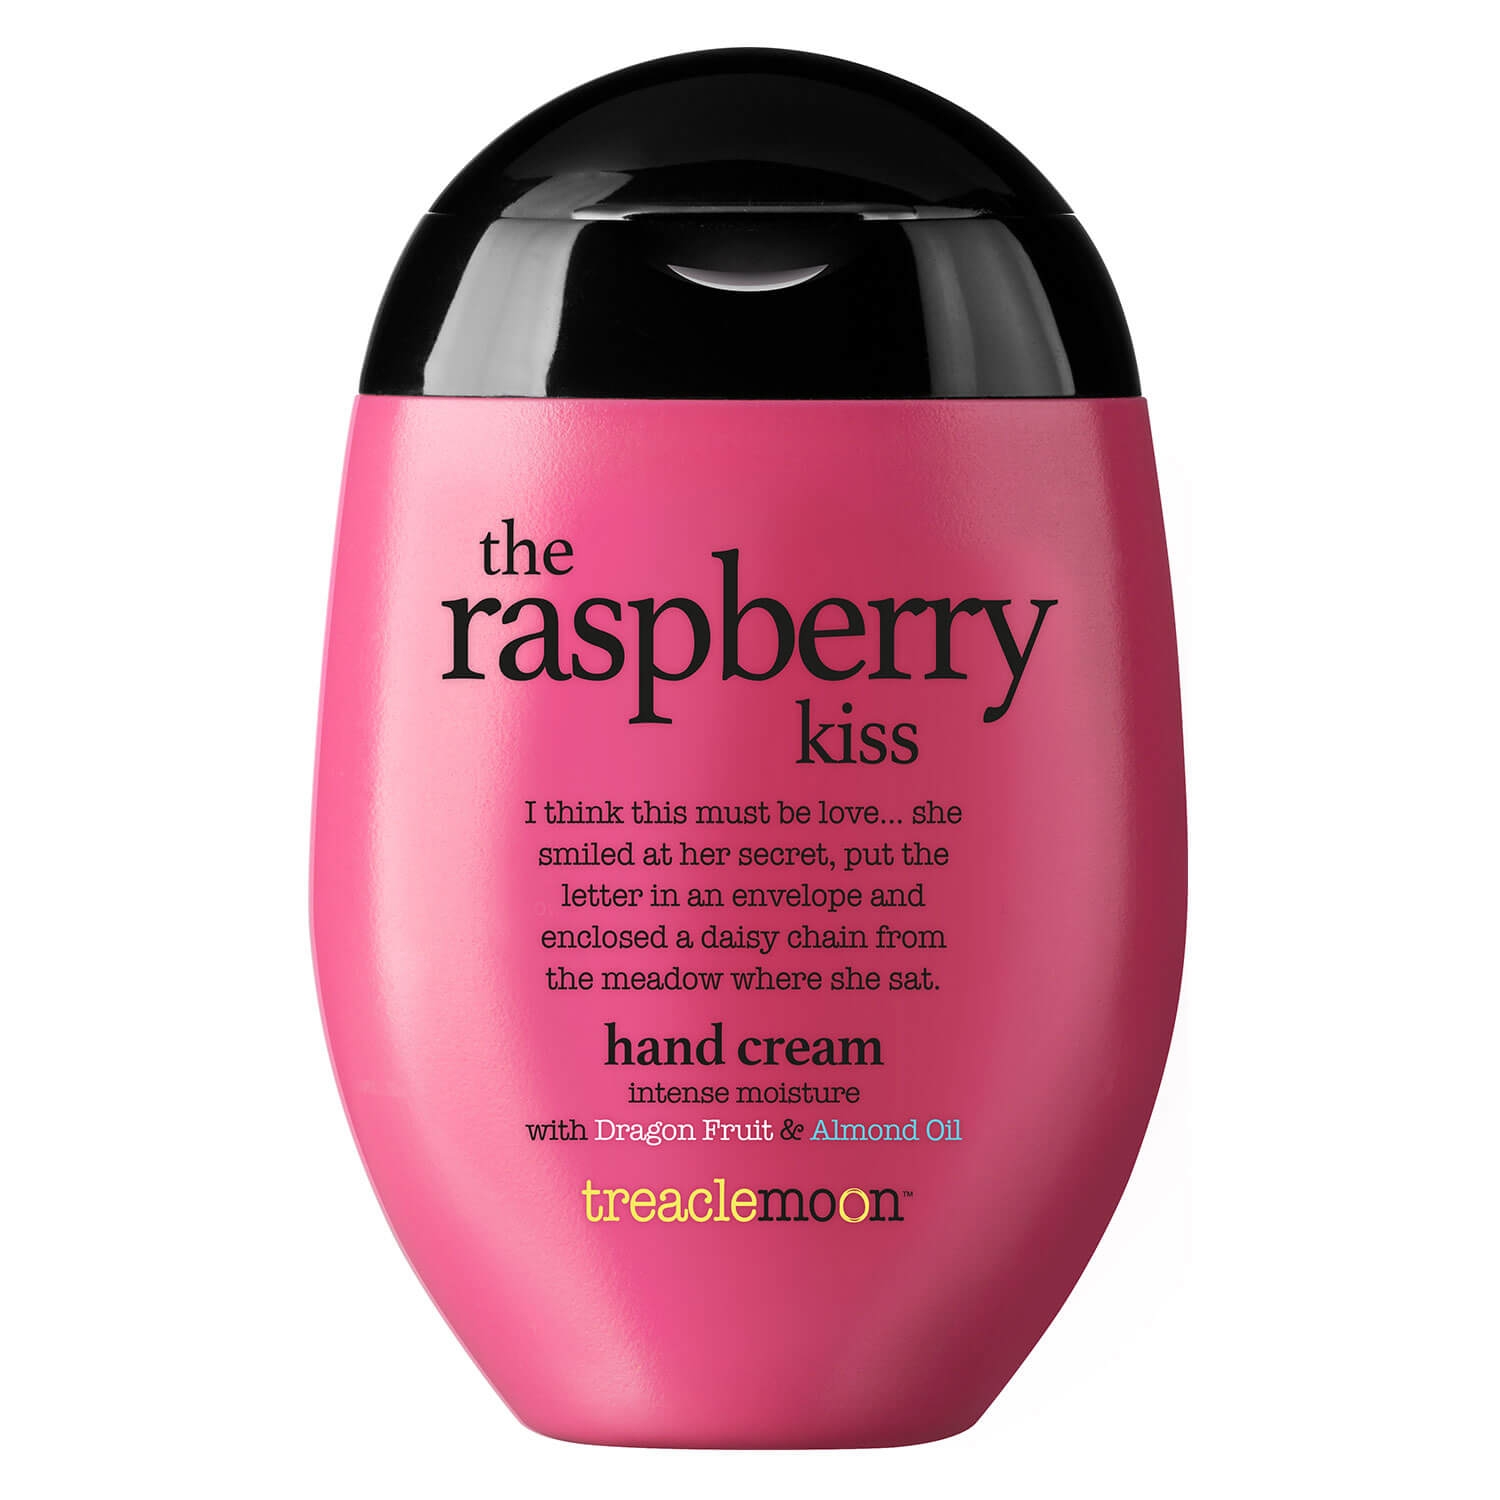 Produktbild von treaclemoon - the raspberry kiss hand cream